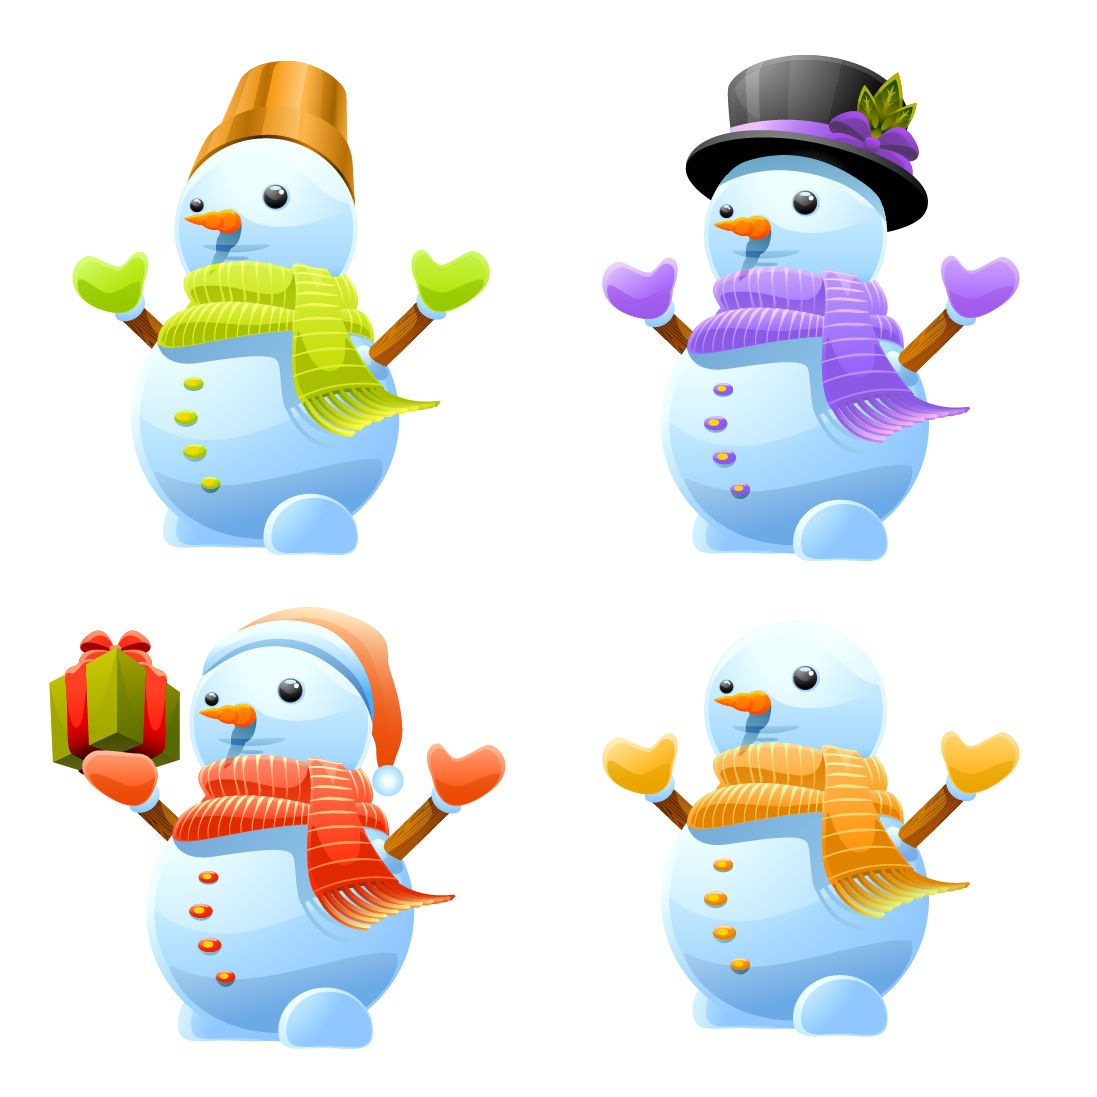 Cute Snowman Vector Art